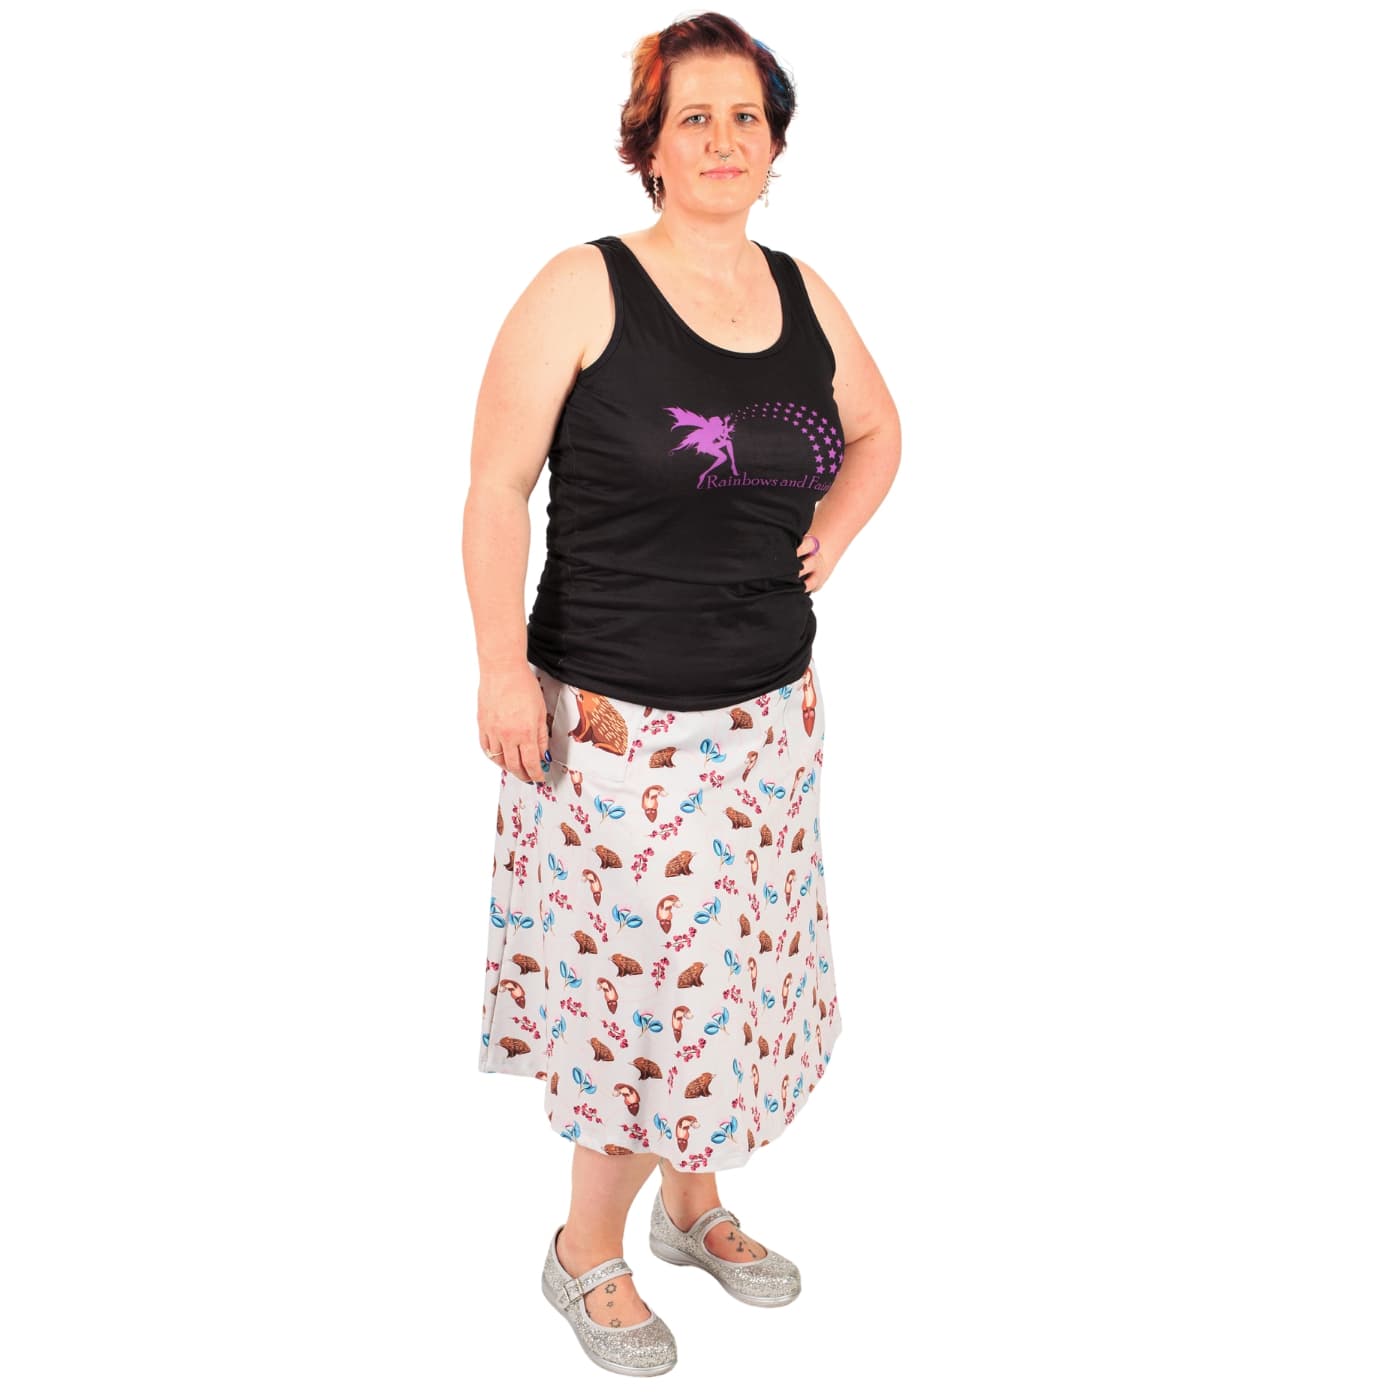 Puggle Original Skirt by RainbowsAndFairies.com.au (Platypus - Echidna - Australian - Skirt With Pockets - Kitsch) - SKU: CL_OSKRT_PUGGL_ORG - Pic-02